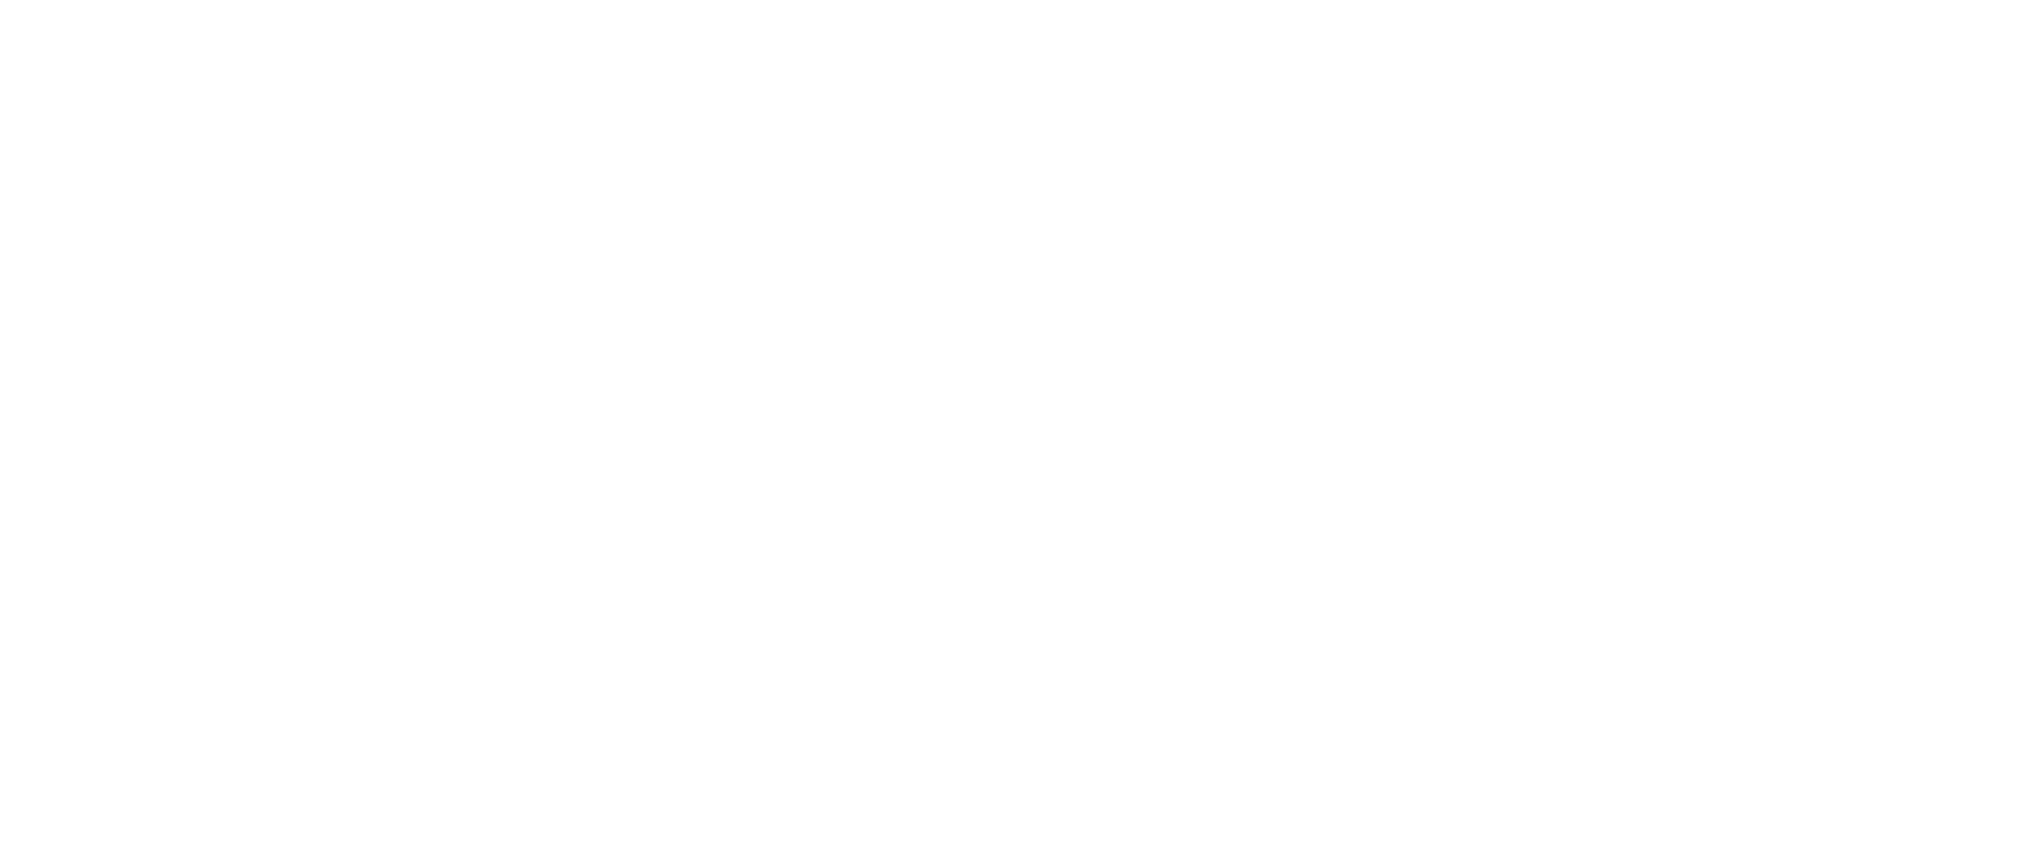 Sustainable Development Solutions Network logo